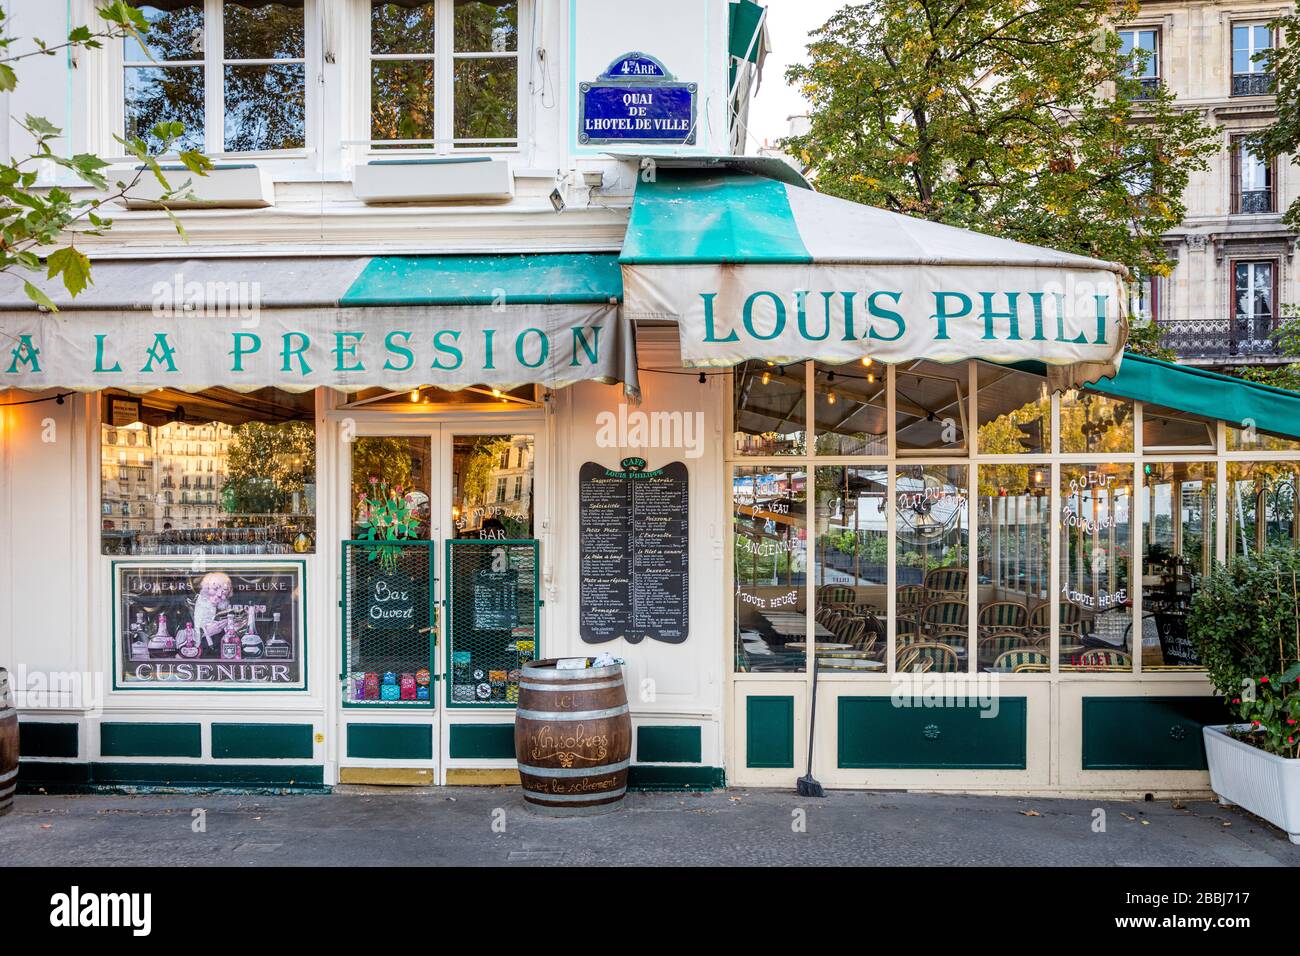 Cafe - Restaurant Louis Philippe near River Seine in the Marais, 4th Arrondissement, Paris, France Stock Photo